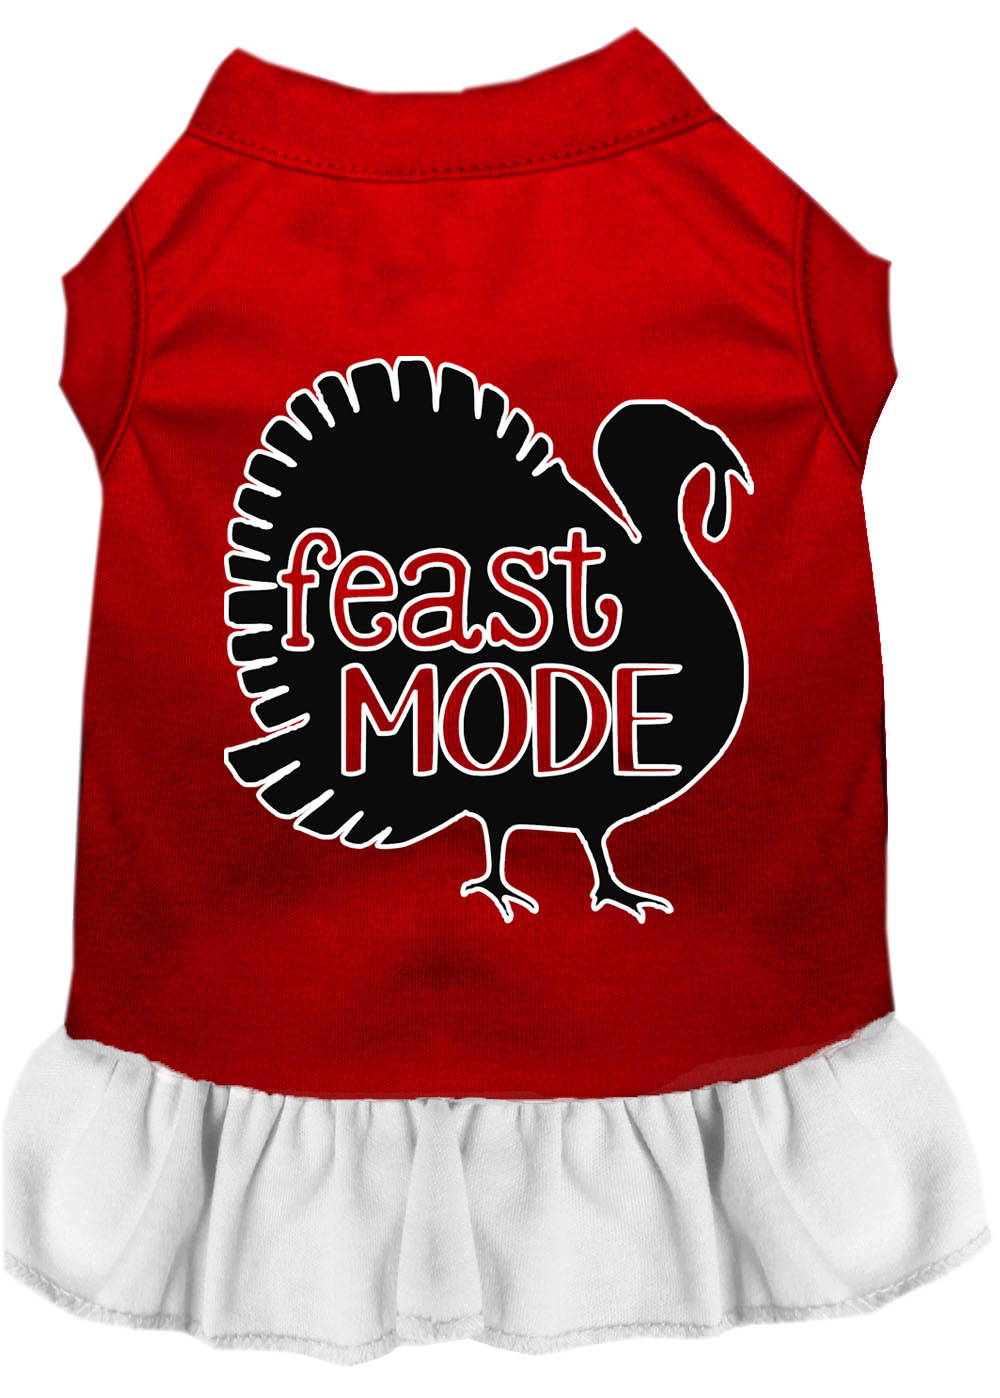 Feast Mode Screen Print Dog Dress Red with White XXXL